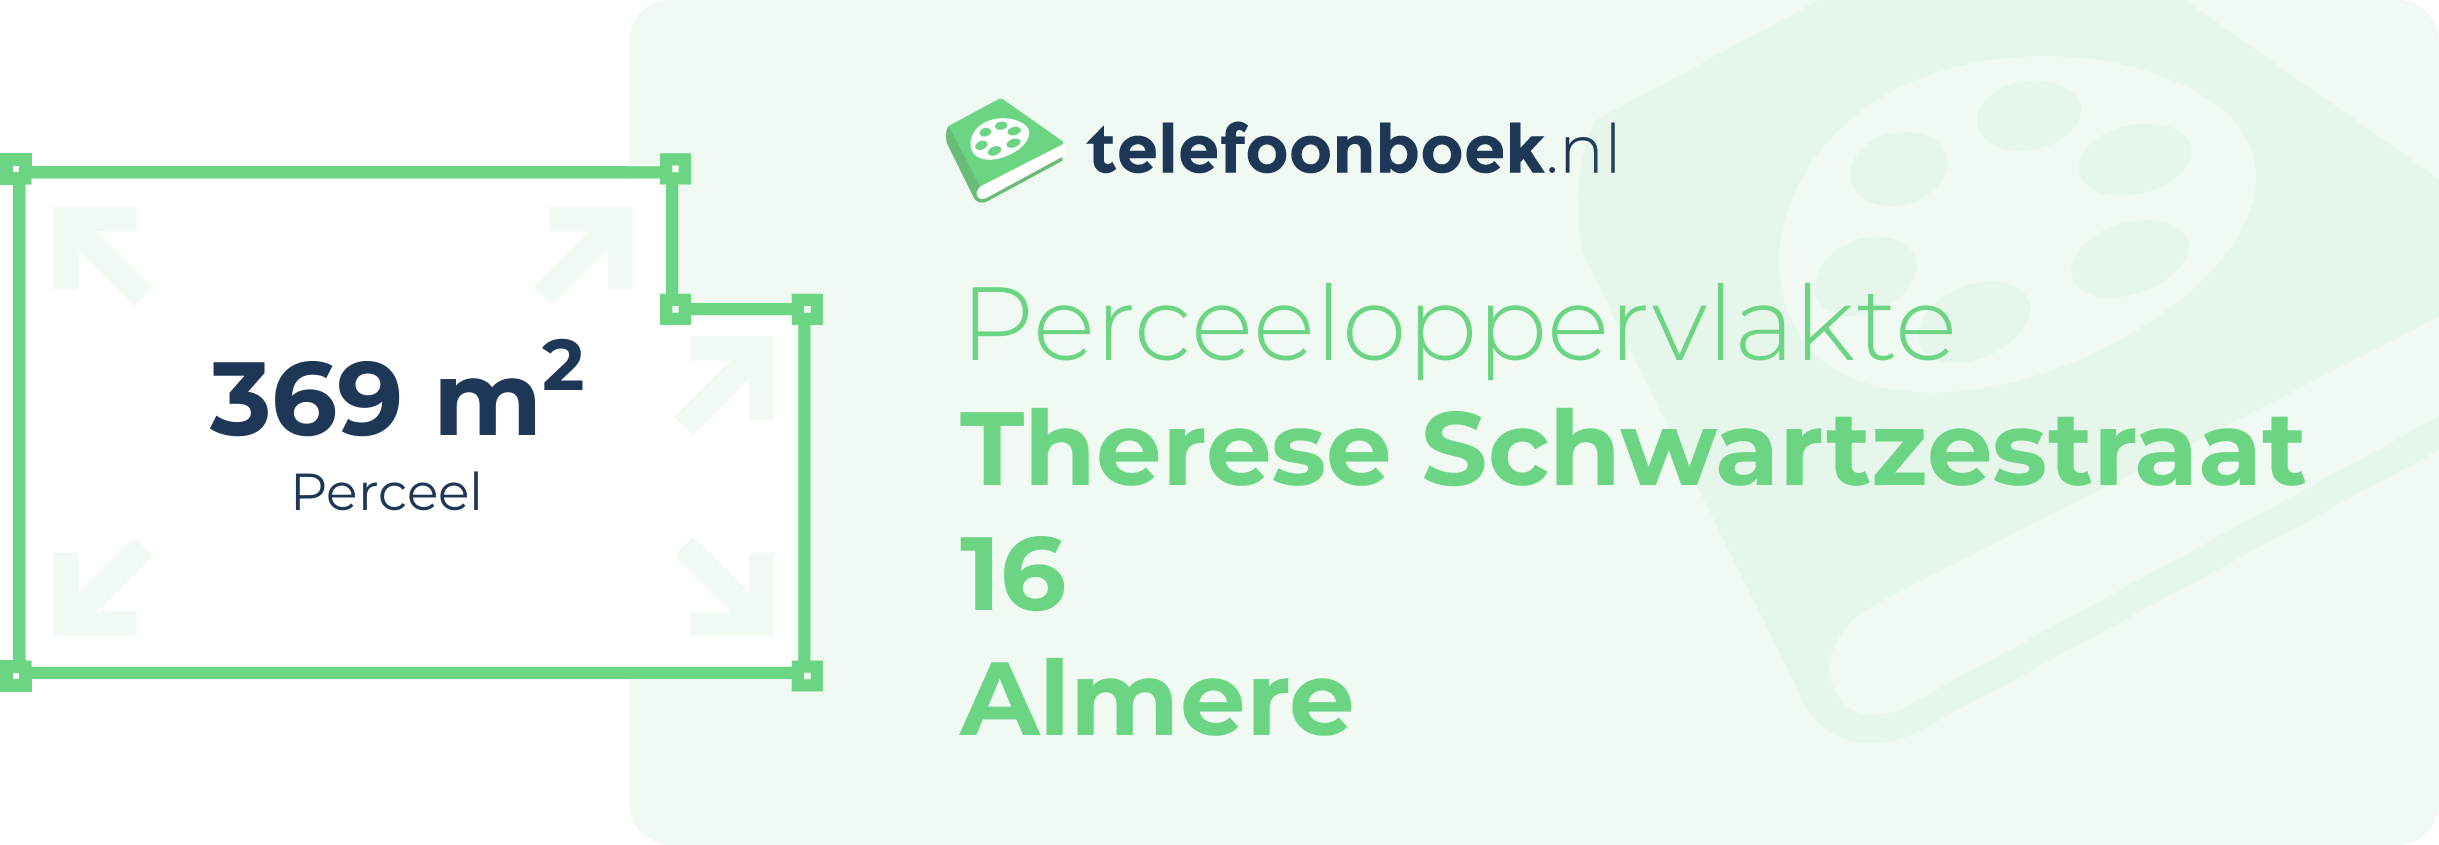 Perceeloppervlakte Therese Schwartzestraat 16 Almere